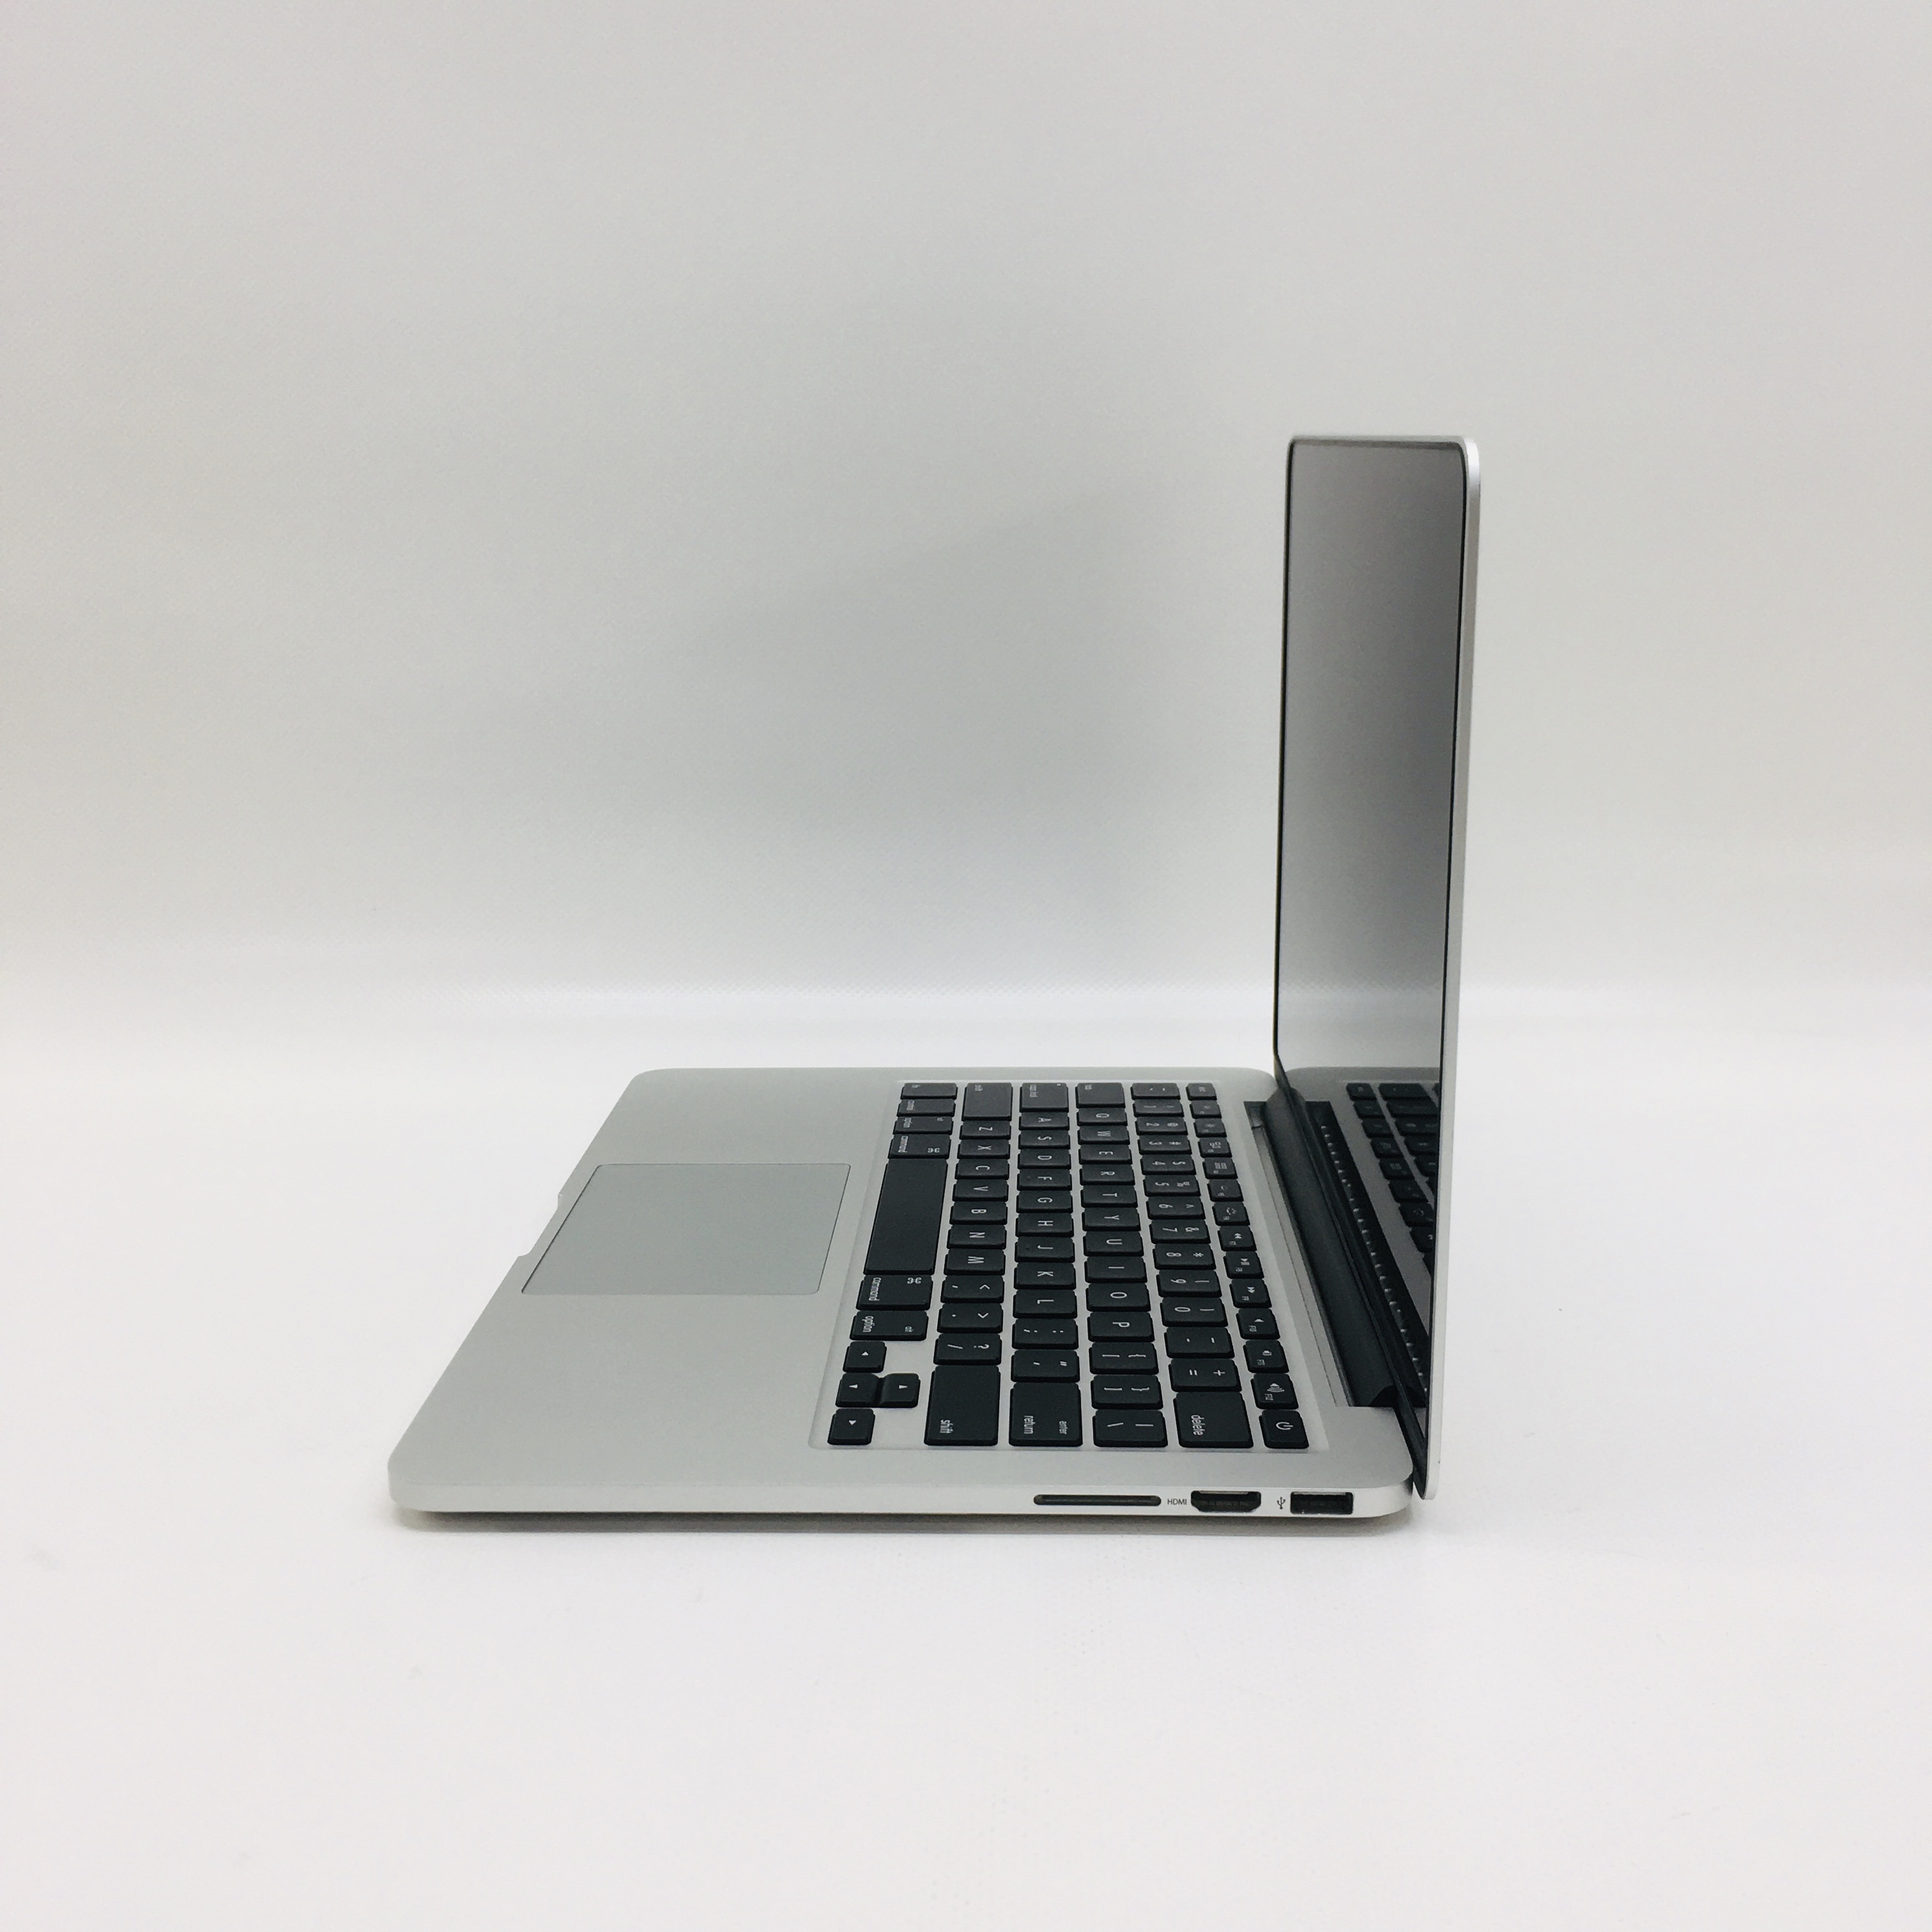 MacBook Pro Retina 13" Late 2013 (Intel Core i5 2.4 GHz 8 GB RAM 256 GB SSD), Intel Core i5 2.4 GHz, 8 GB RAM, 256 GB SSD, image 3